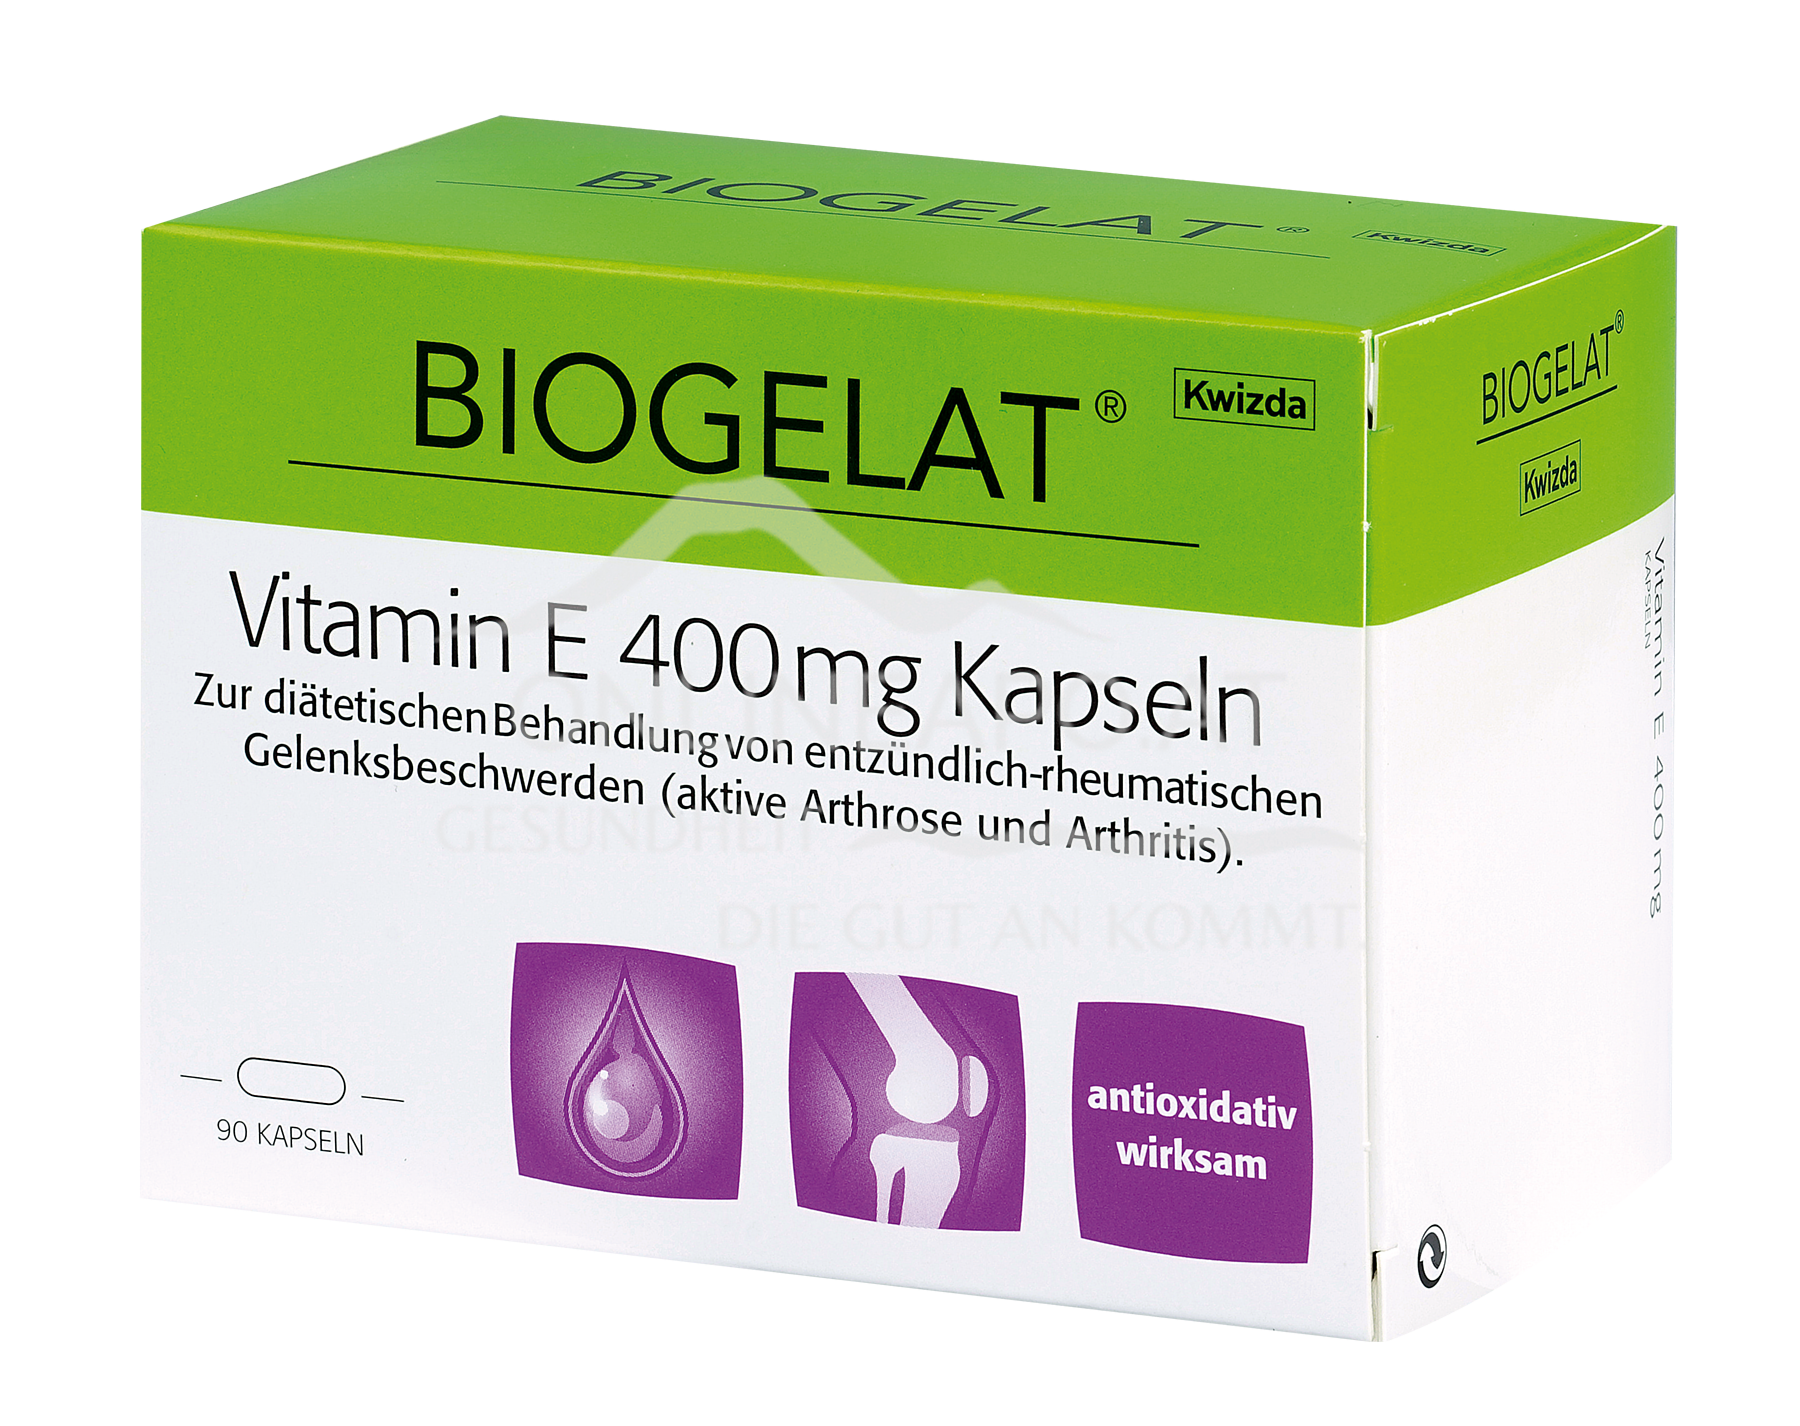 BIOGELAT® Vitamin E 400 mg Kapseln